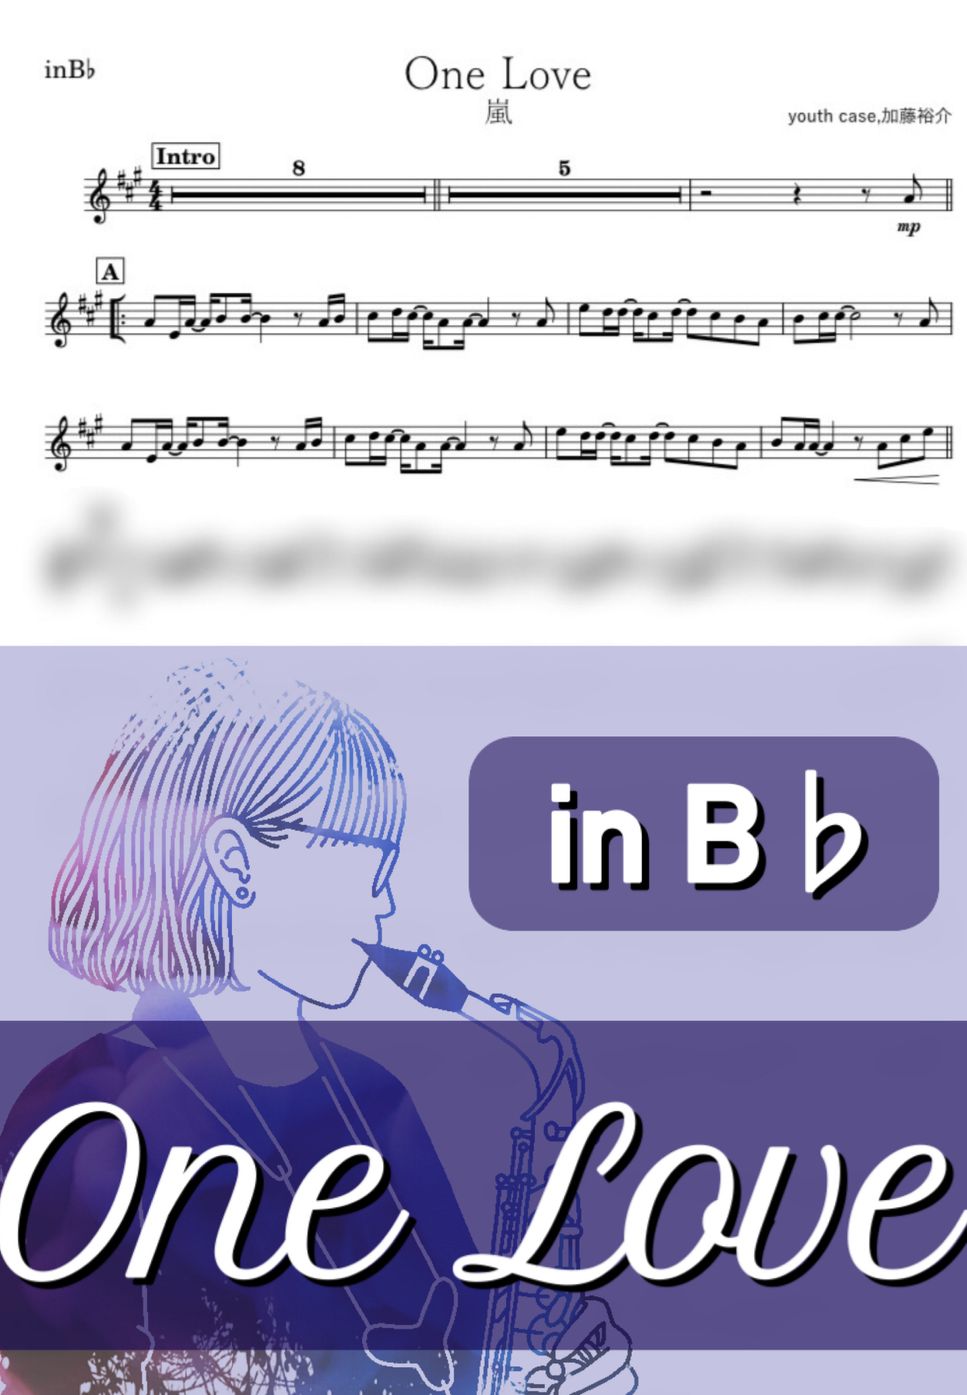 嵐 - One Love (B♭) by kanamusic